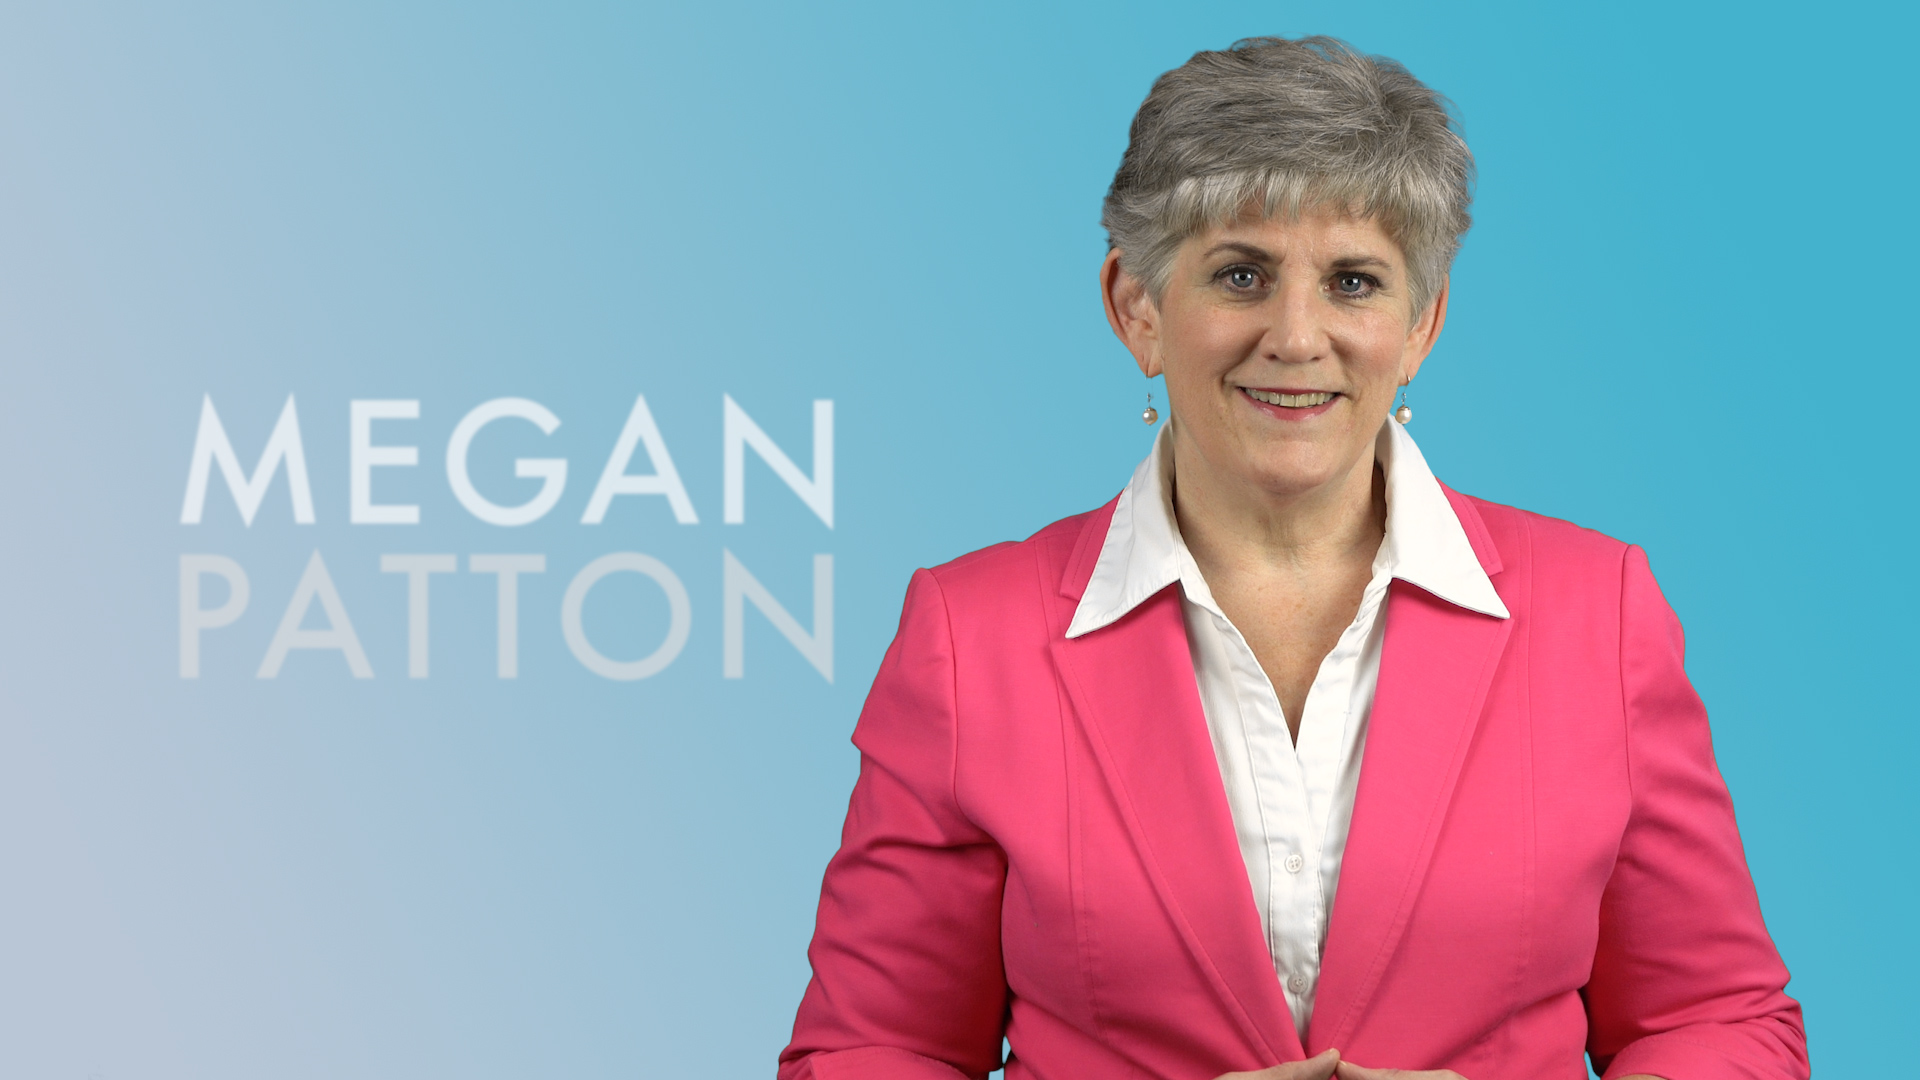 Megan Patton Branding for Employee Attraction